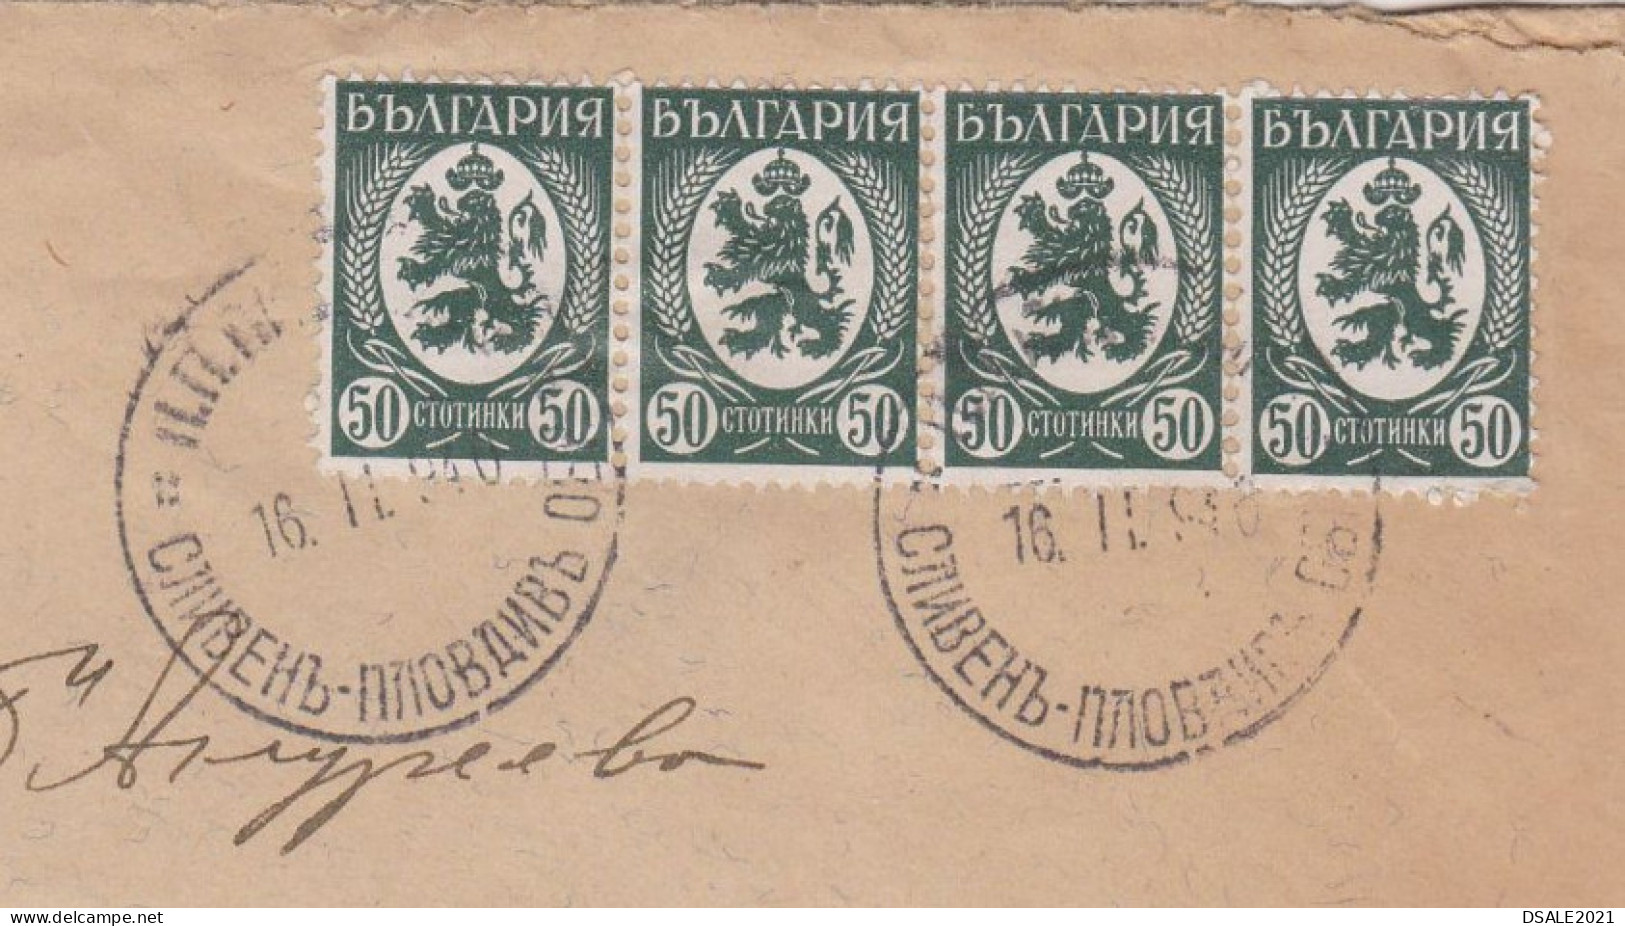 Bulgaria Bulgarie1940 Cover W/Topic Stamps Sent Via Railway TPO ZUG Bahnpost (SLIVEN-PLOVDIV BACK) To Kazanlik (937) - Covers & Documents